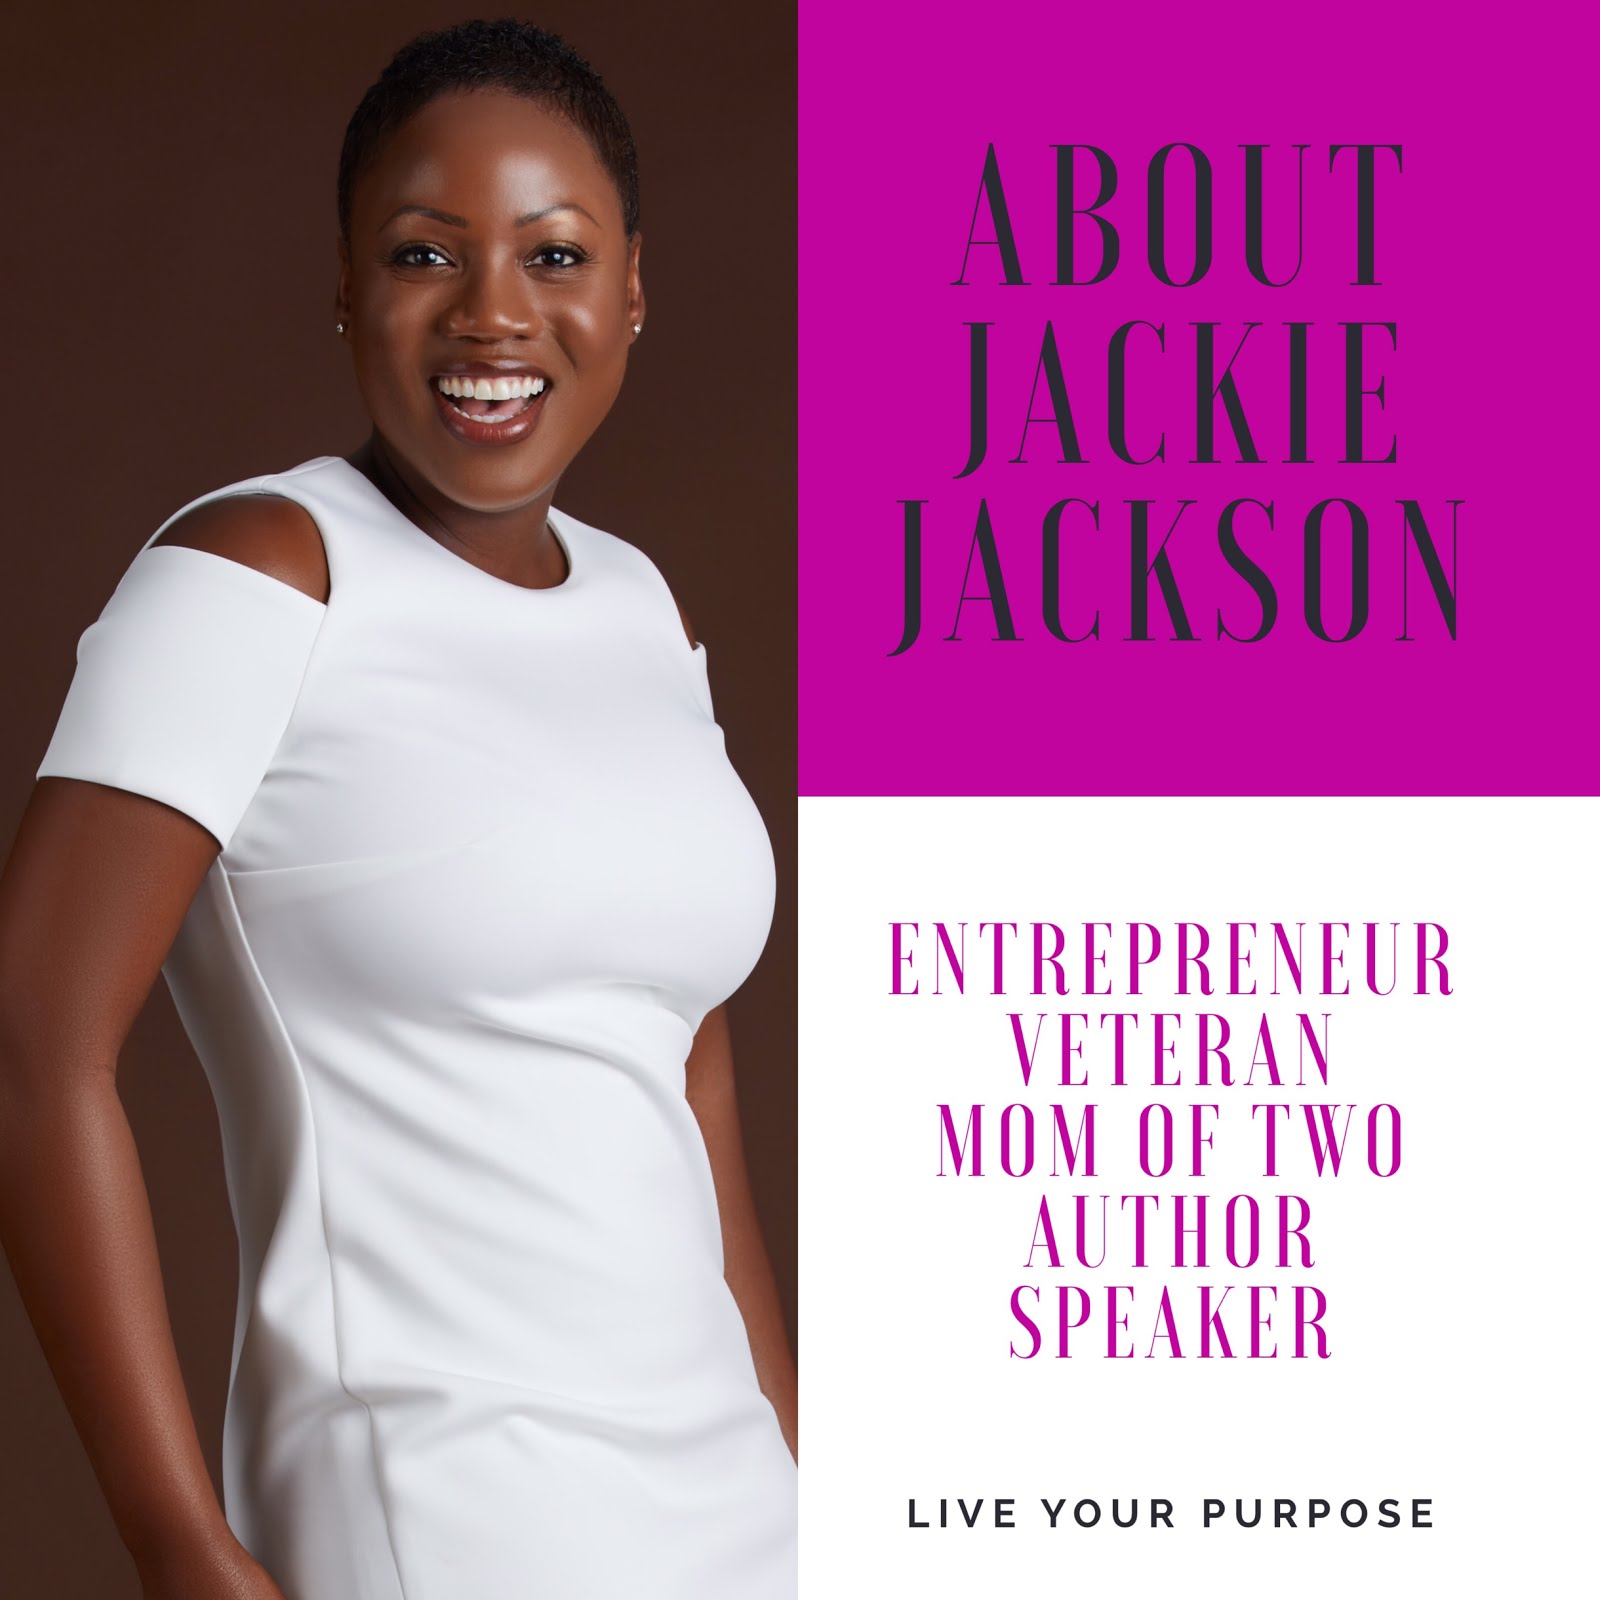 Who is Jackie Jackson?